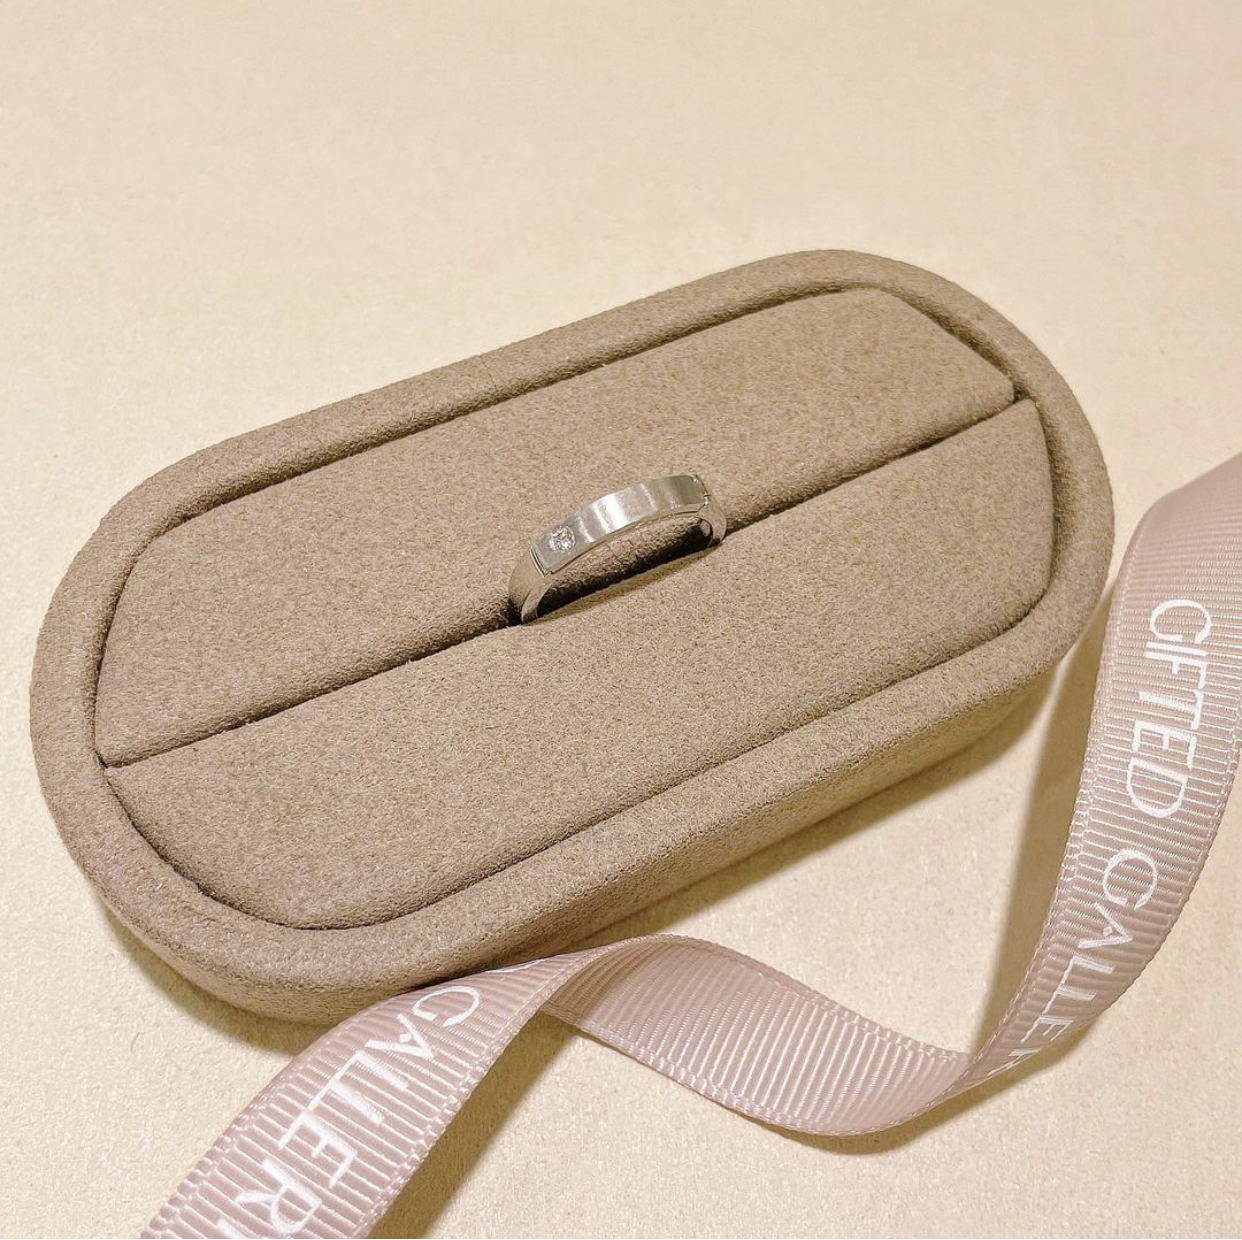 FIANCÉE-Engrave Couple Ring